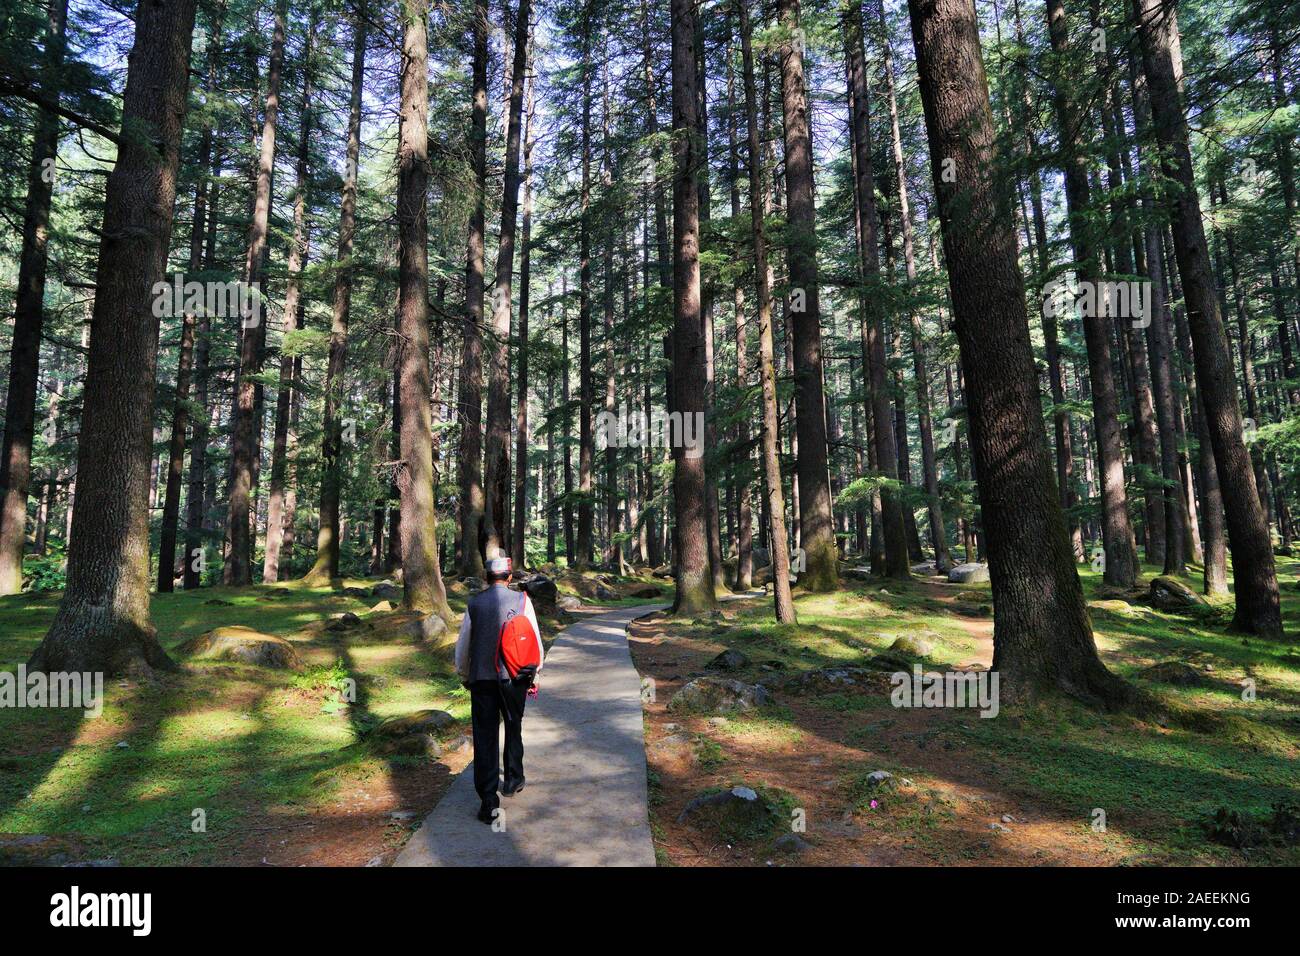 Deodar trees forest, Wildlife Sanctuary, Manali, Himachal Pradesh, India, Asia Stock Photo